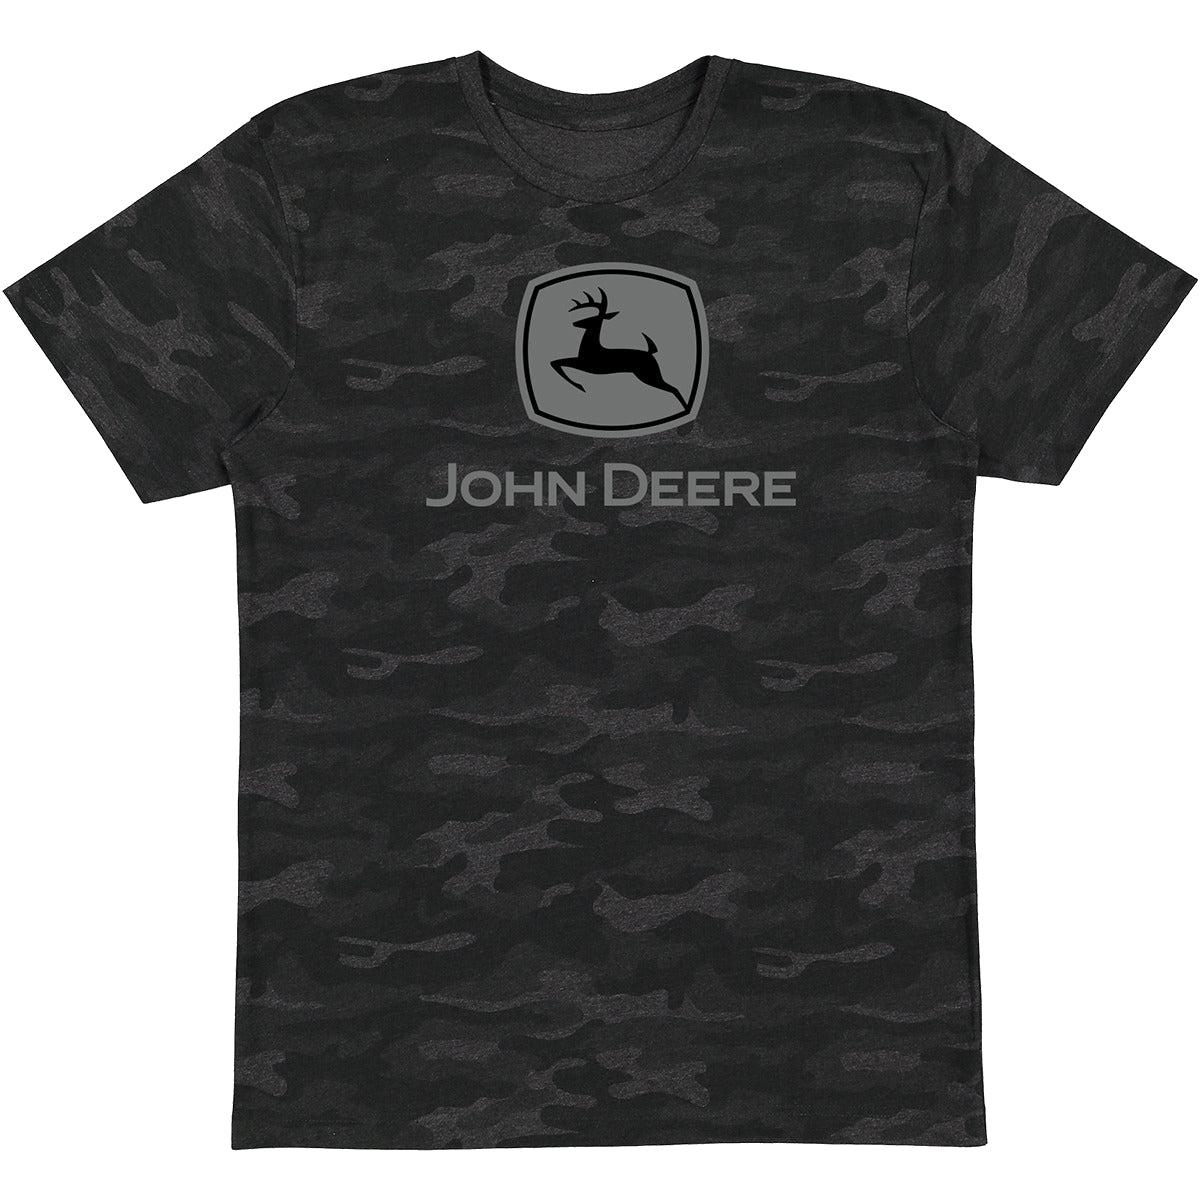 John Deere Mens Black Camo Short Sleeved T-Shirt Large - LP76922